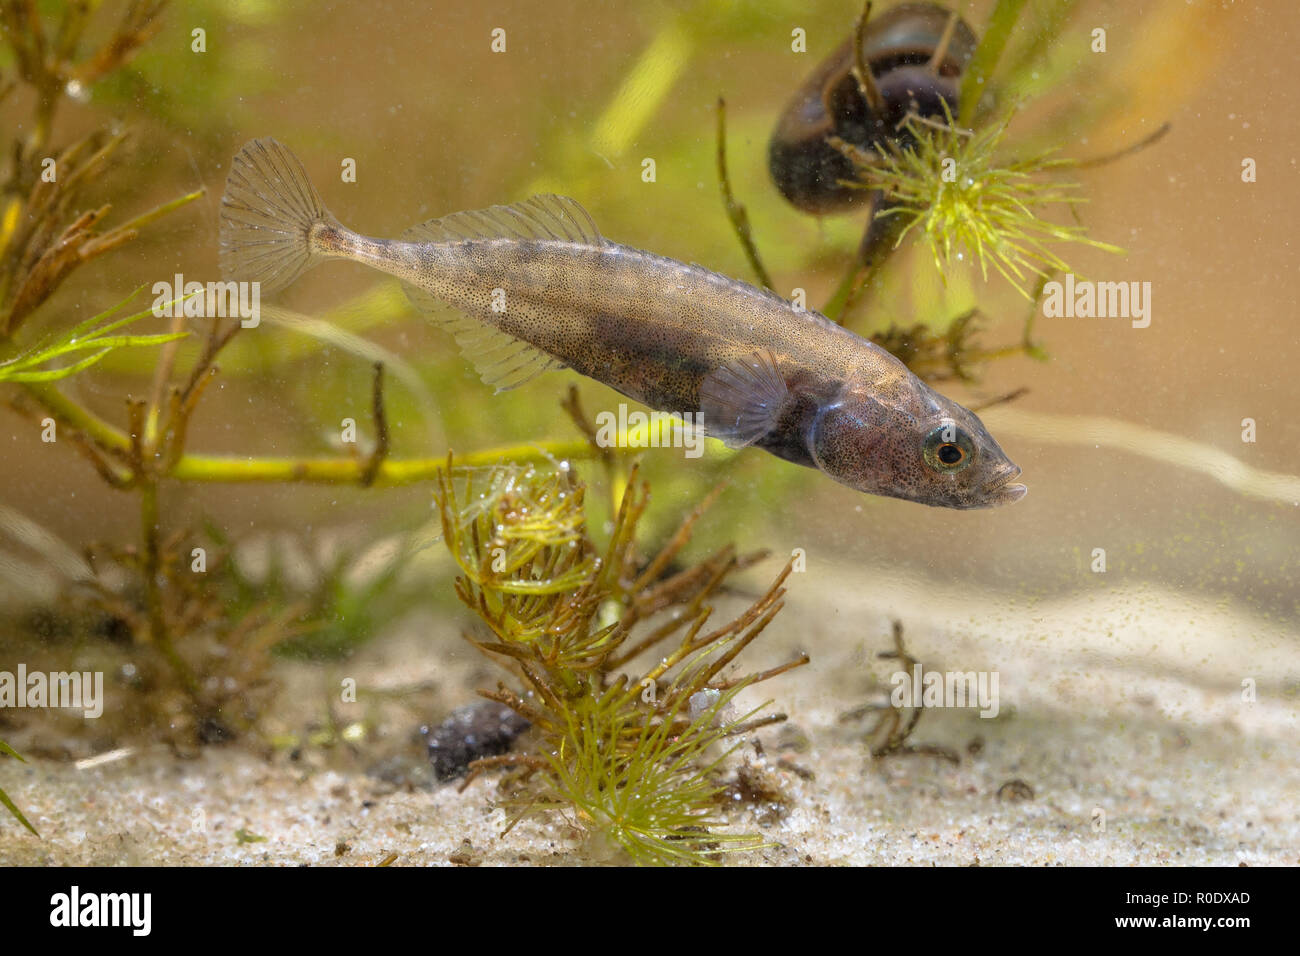 Ninespine Stickleback Freshwater Fish (Pungitius pungitius) in Natural Habitat Stock Photo